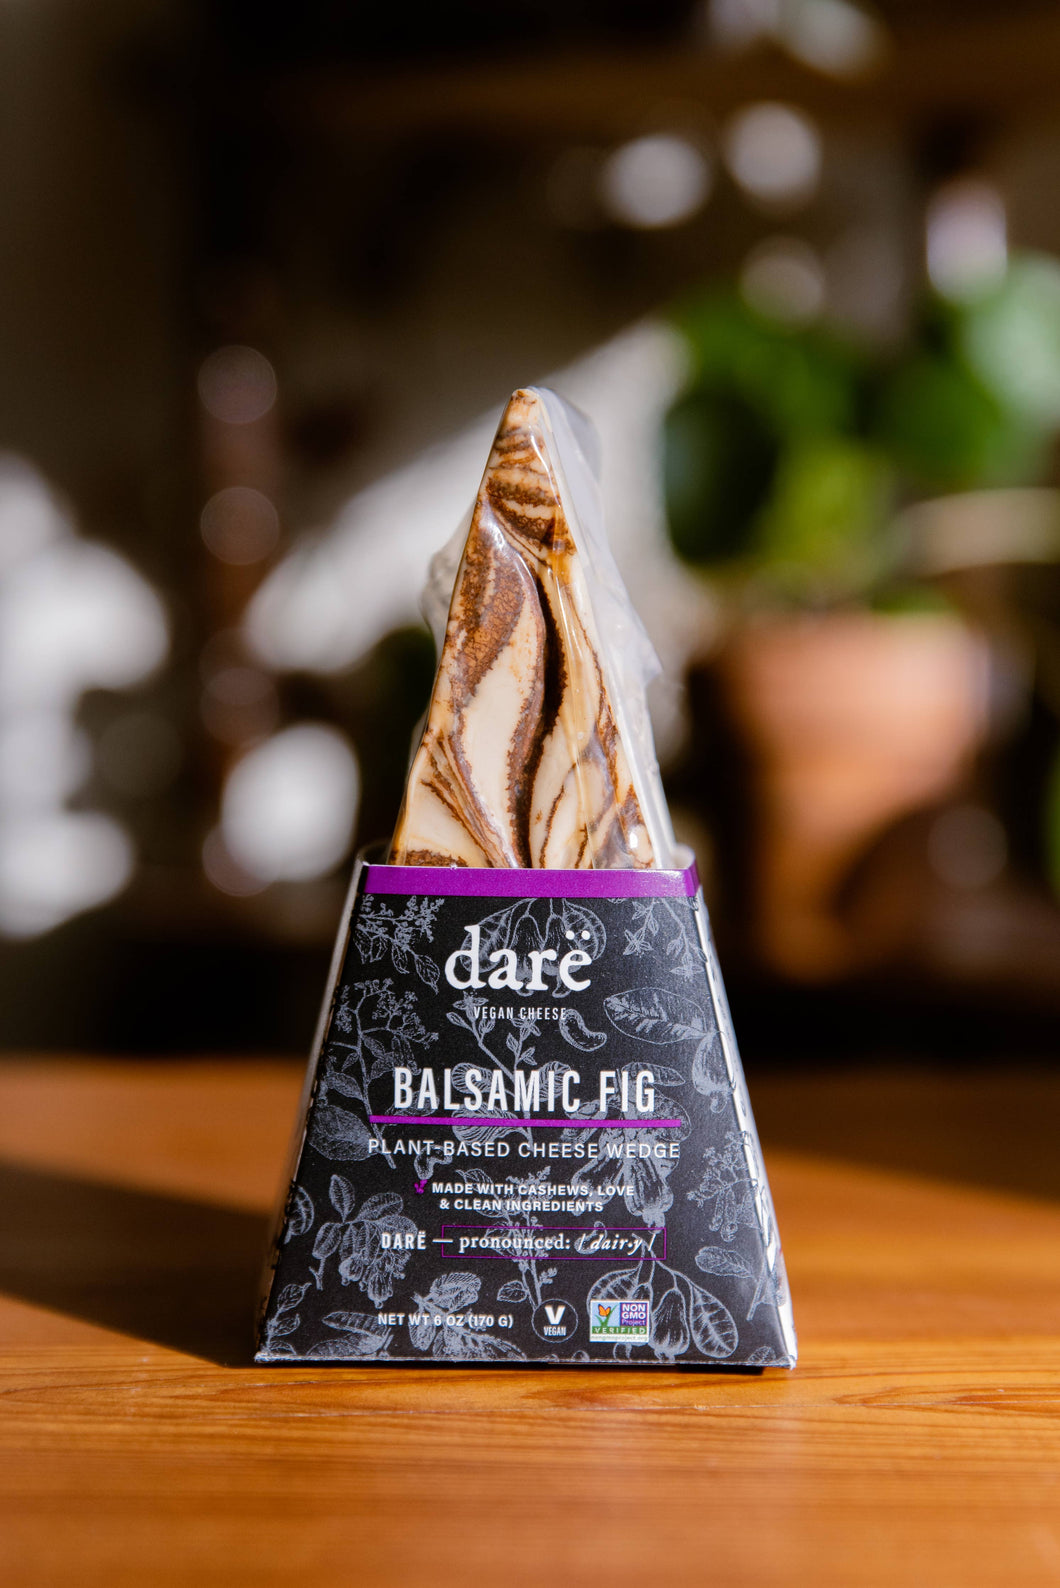 Darë Vegan Cheese - Balsamic Fig Plant-Based Cheese Wedge